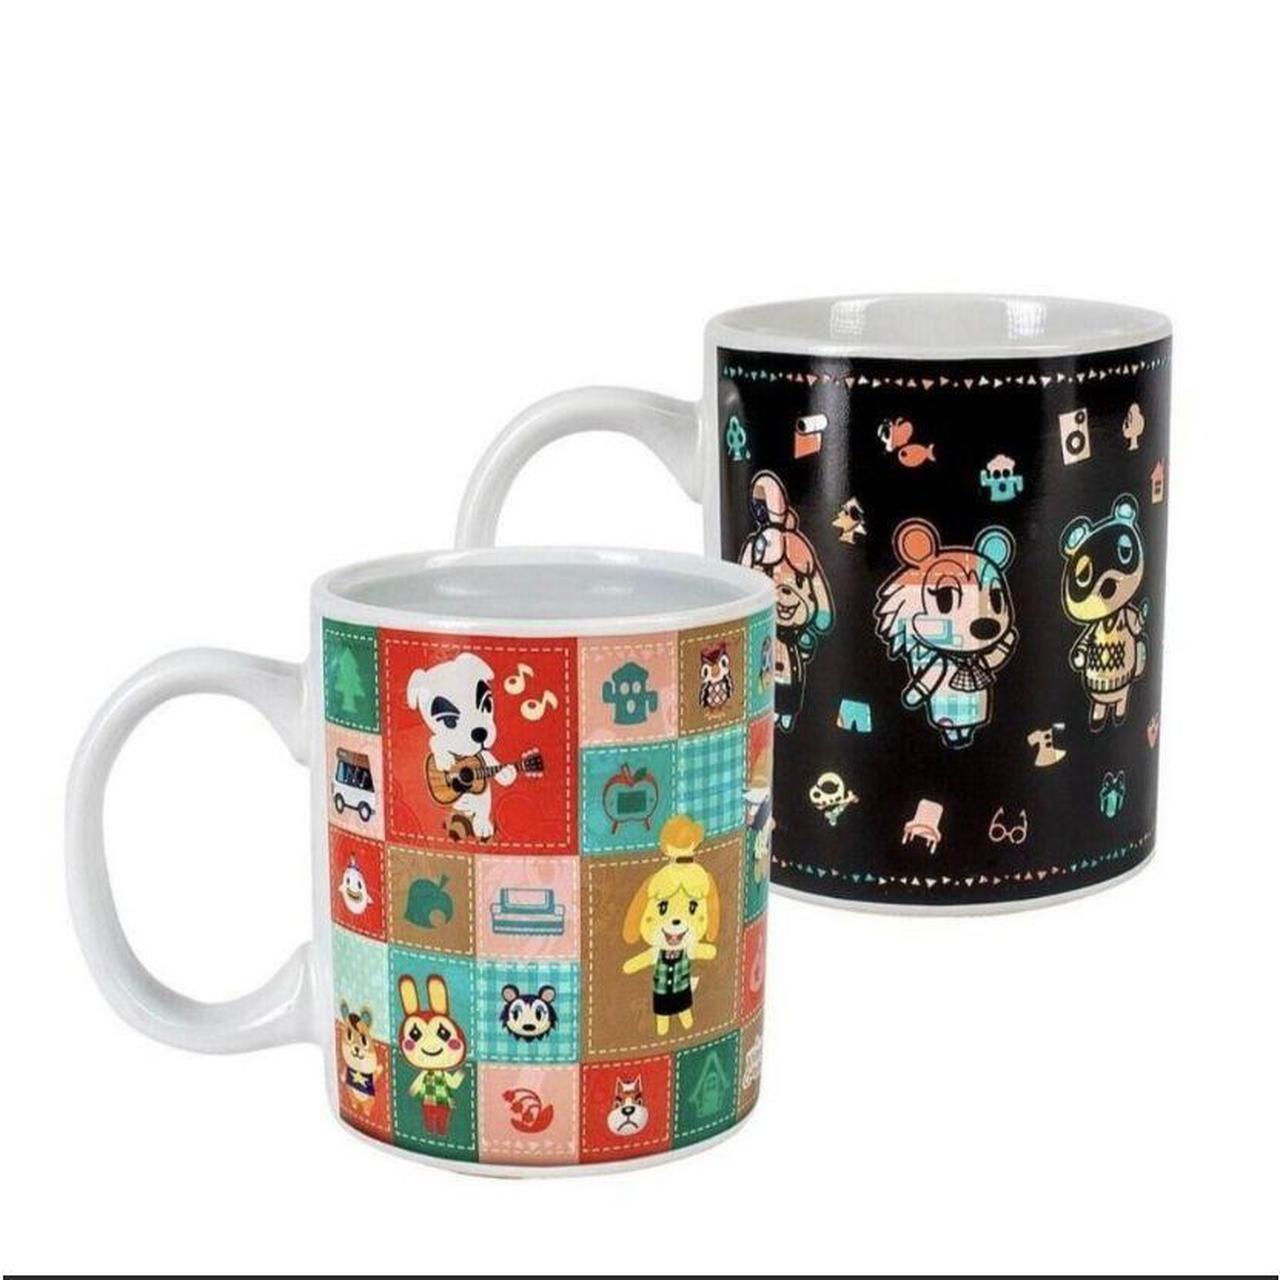 Animal Crossing Characters 10oz Heat Change Ceramic Mug